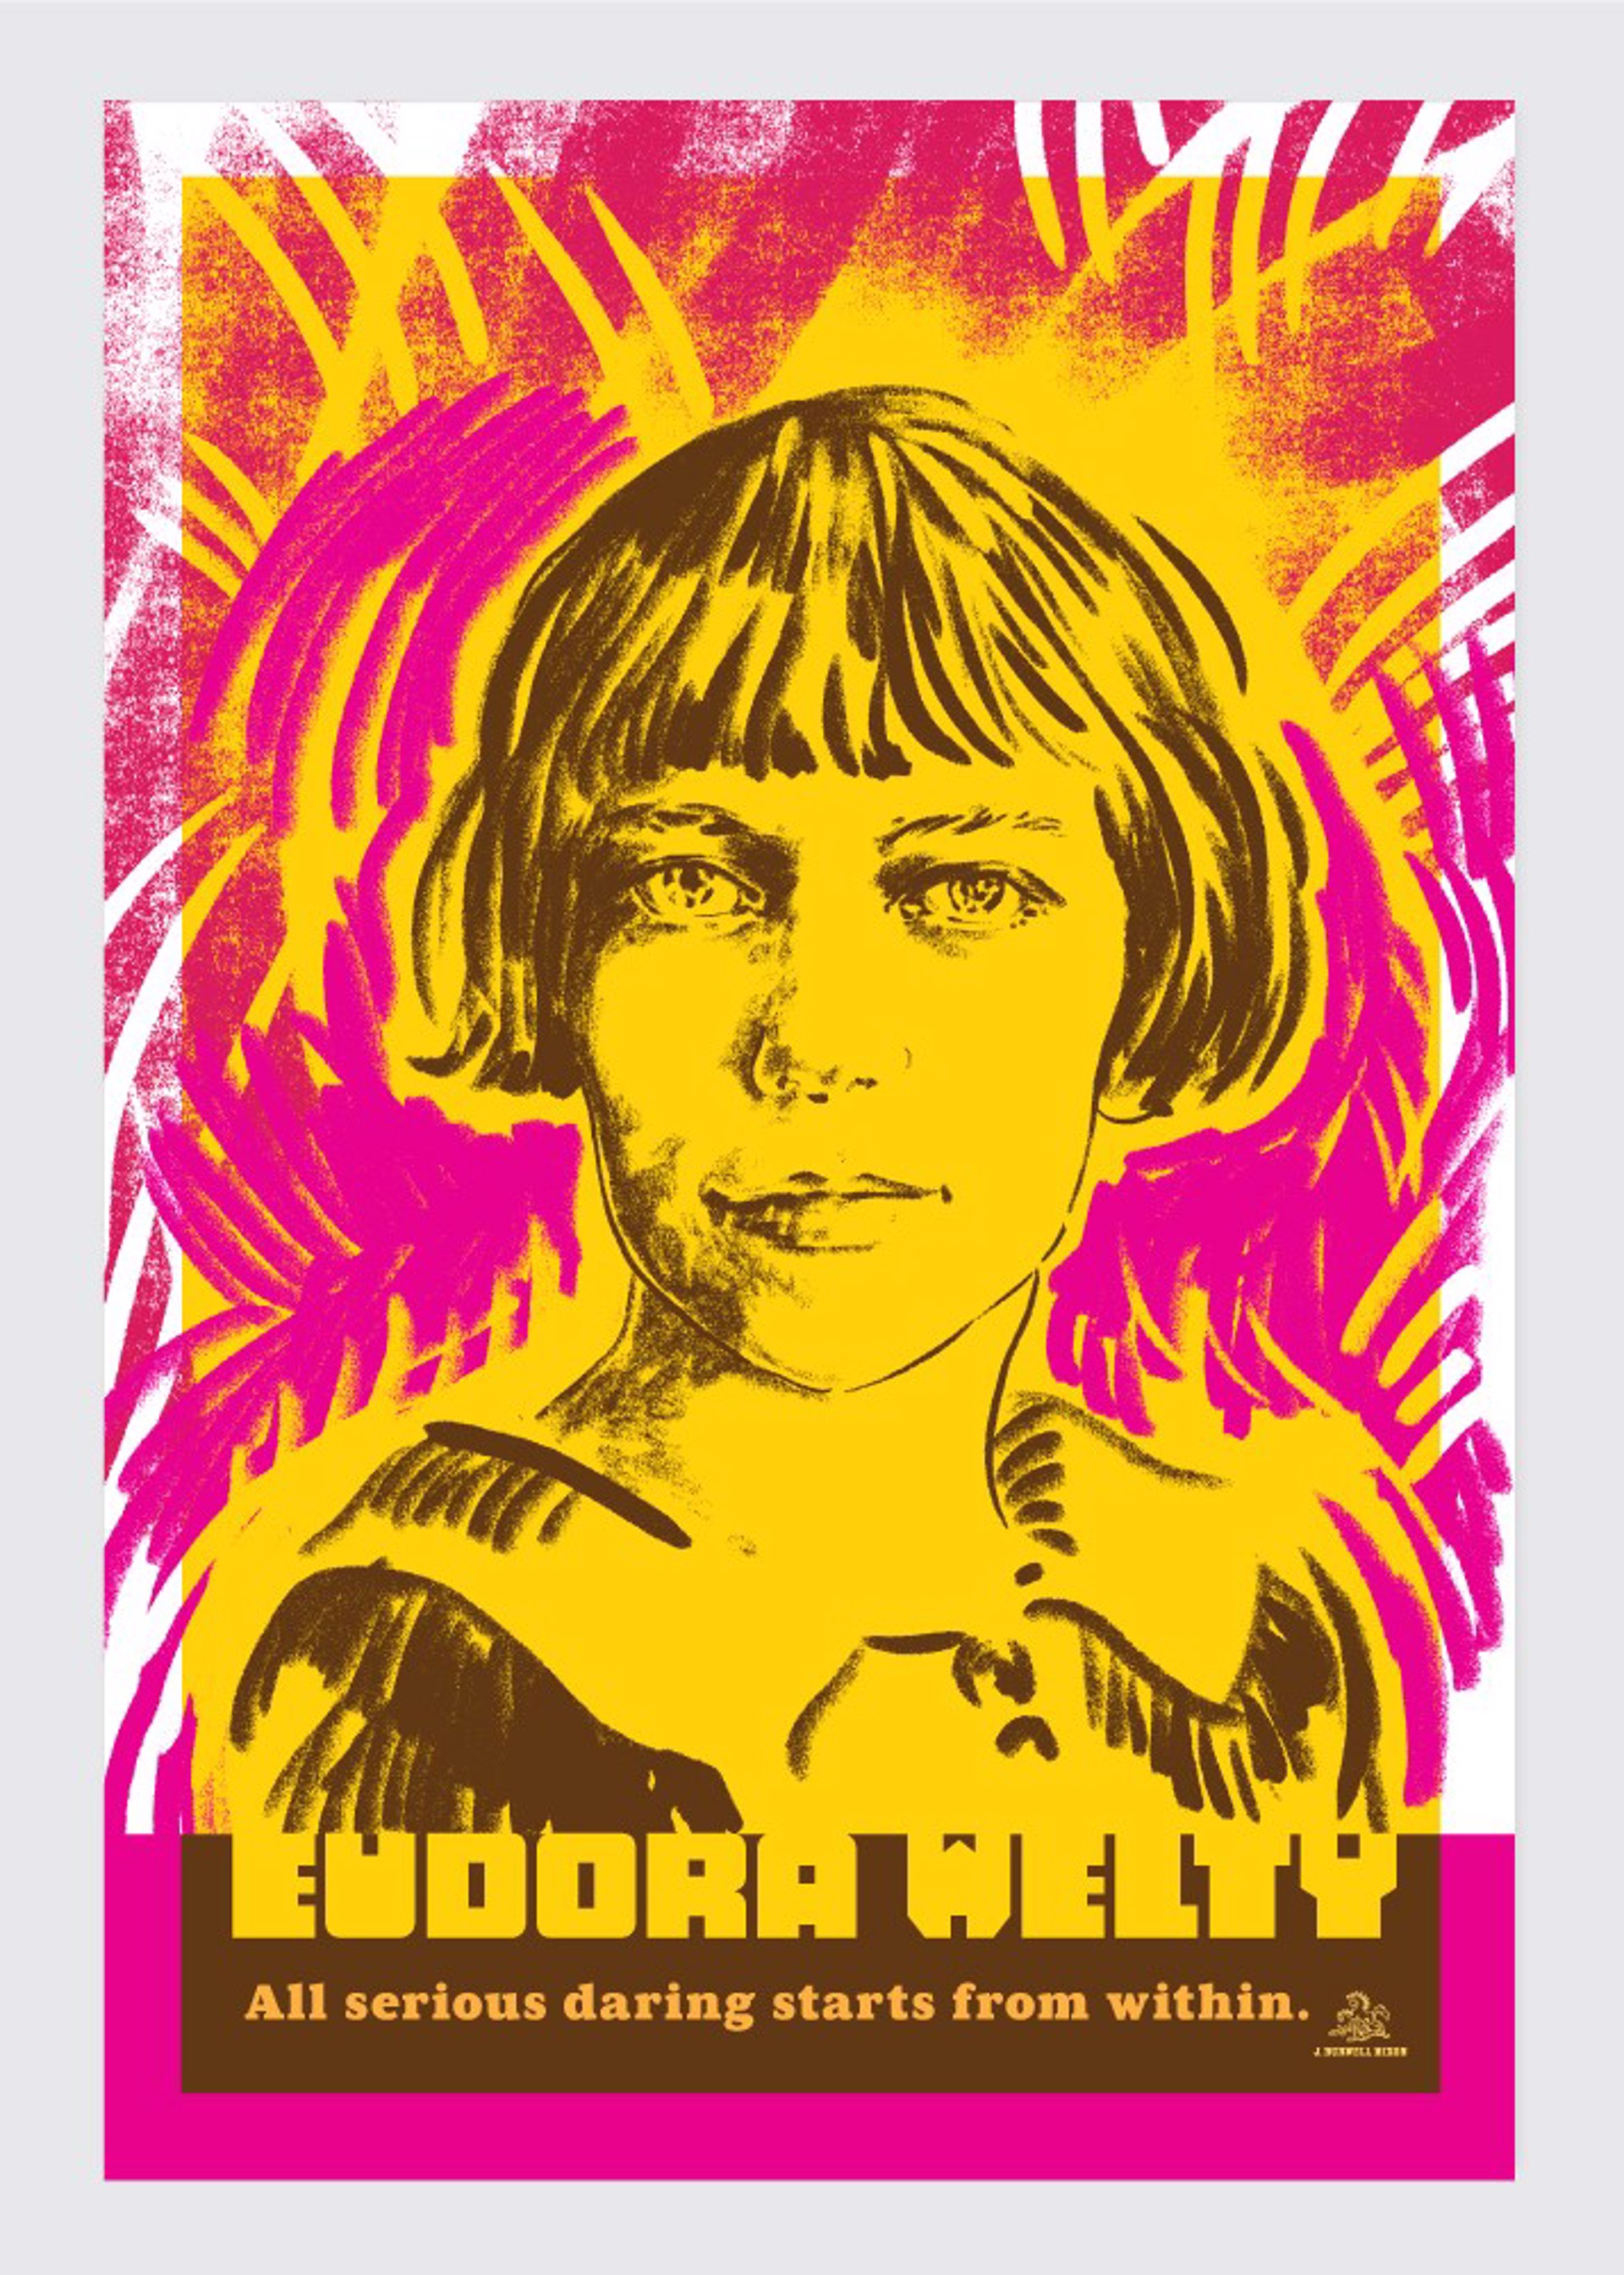 Eudora Welty Poster by Jamie Burwell Mixon